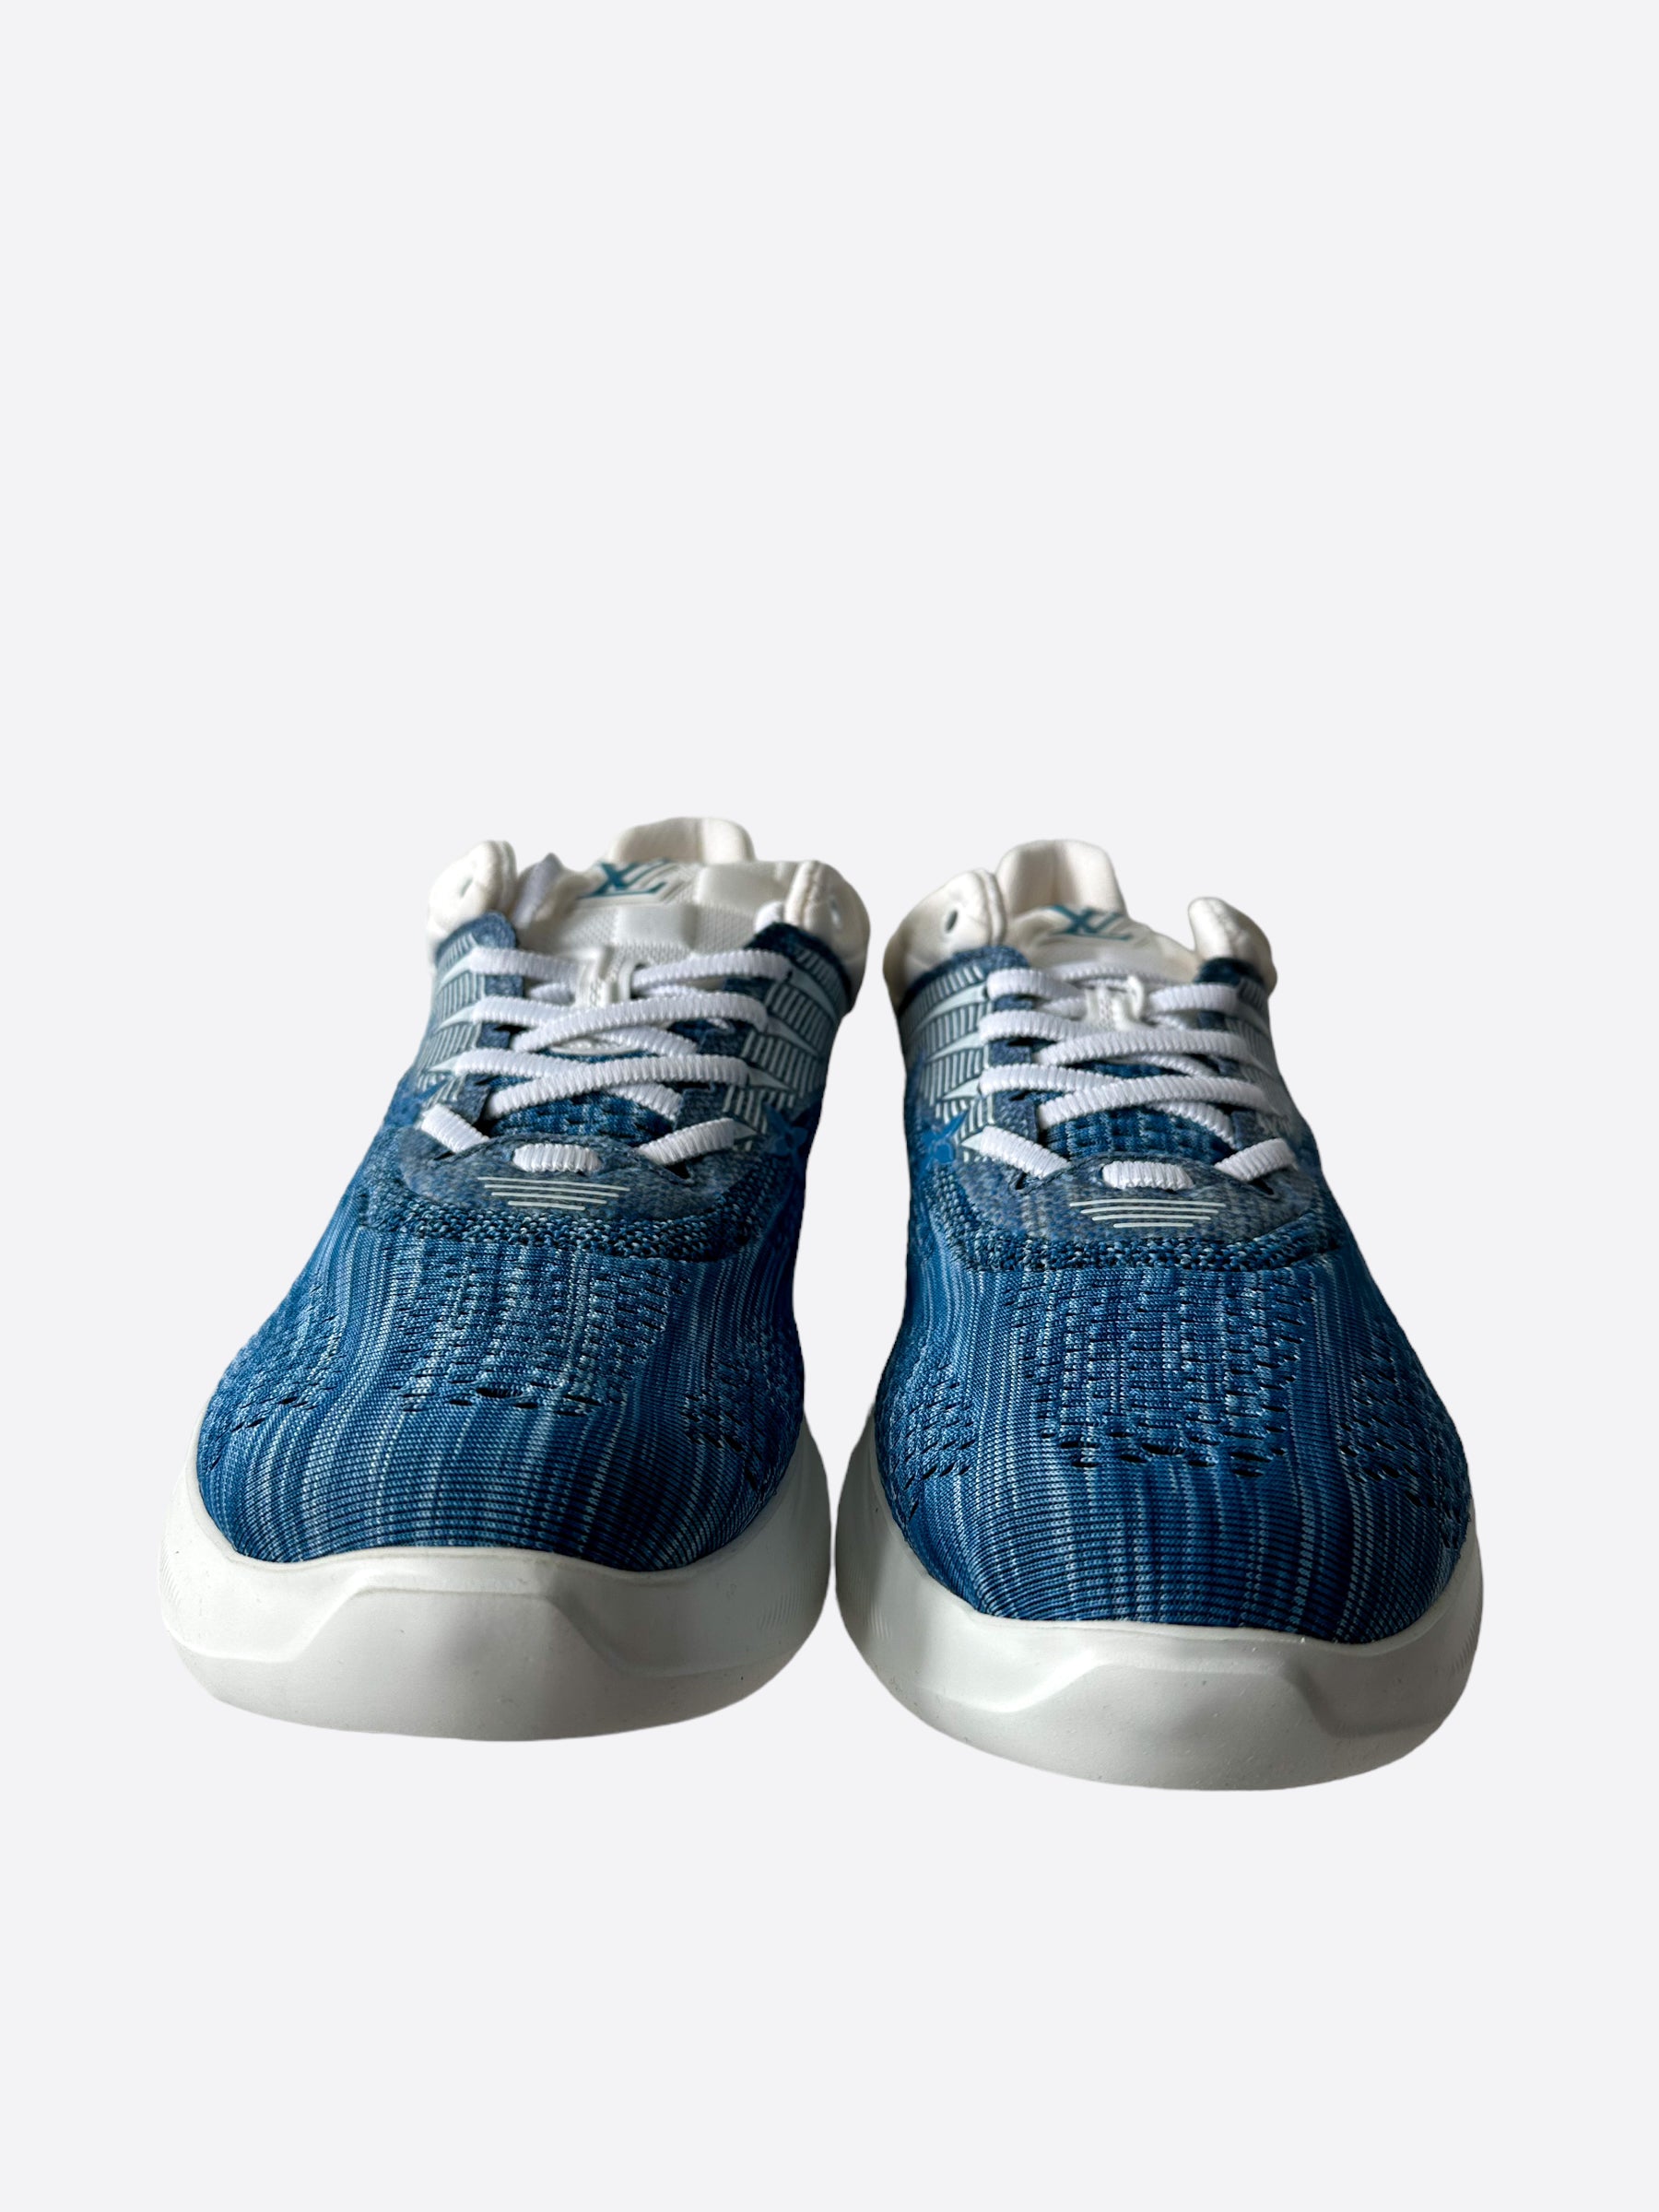 Louis Vuitton $1100 Fastlane Denim Monogram Sneakers